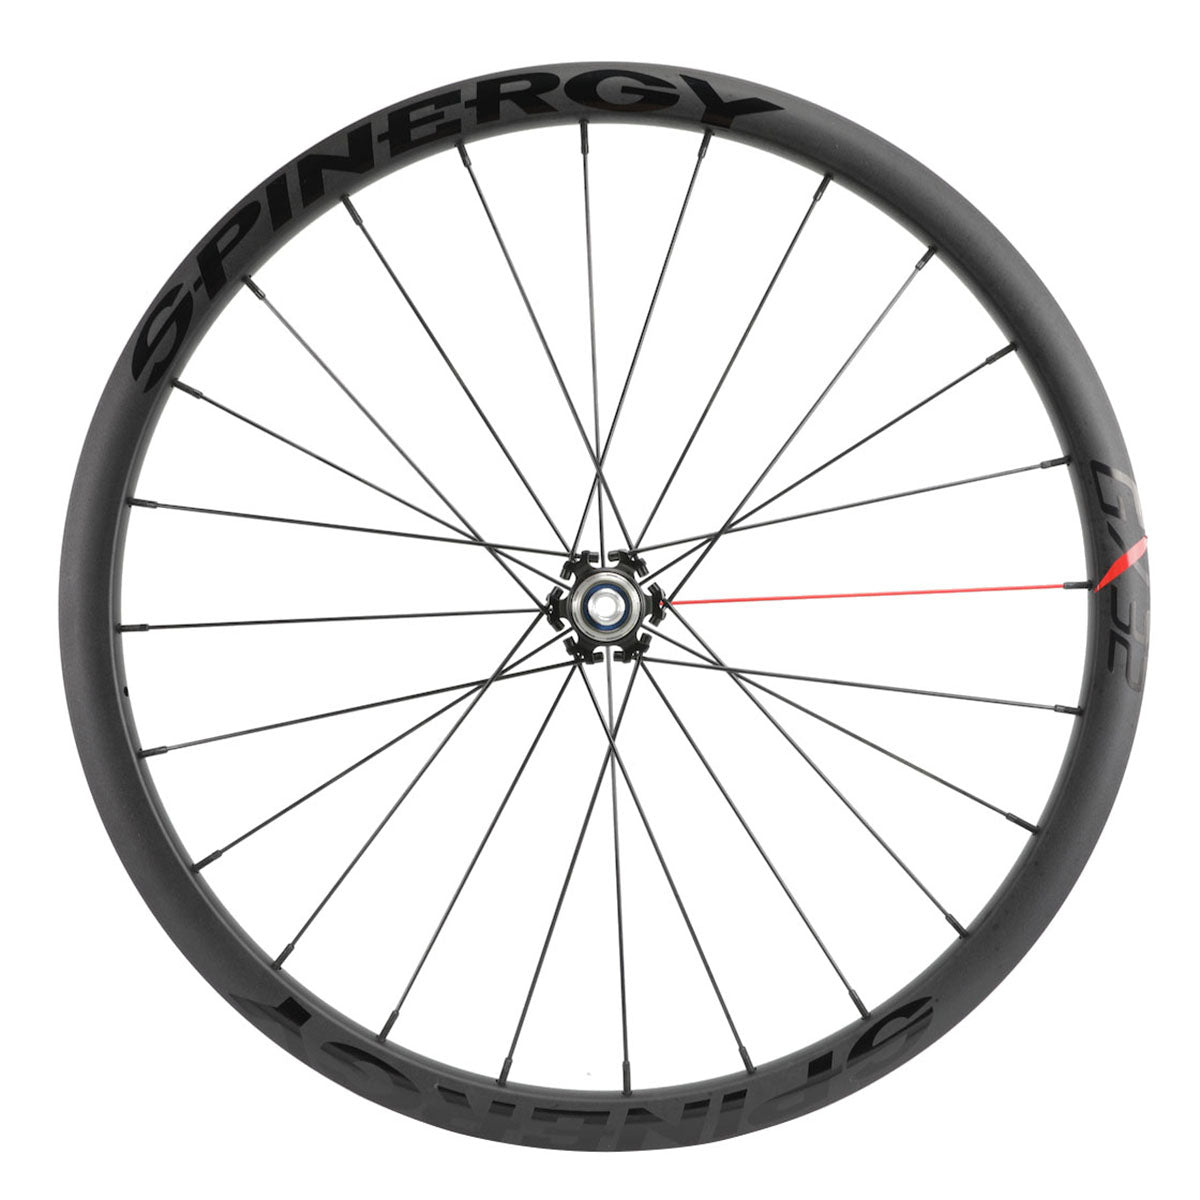 SPINERGY - GX32 700c, 28-40mm Alloy Centerlock Rear Bicycle Wheel - Gravel/CX - 2021 w/ "44" Hub